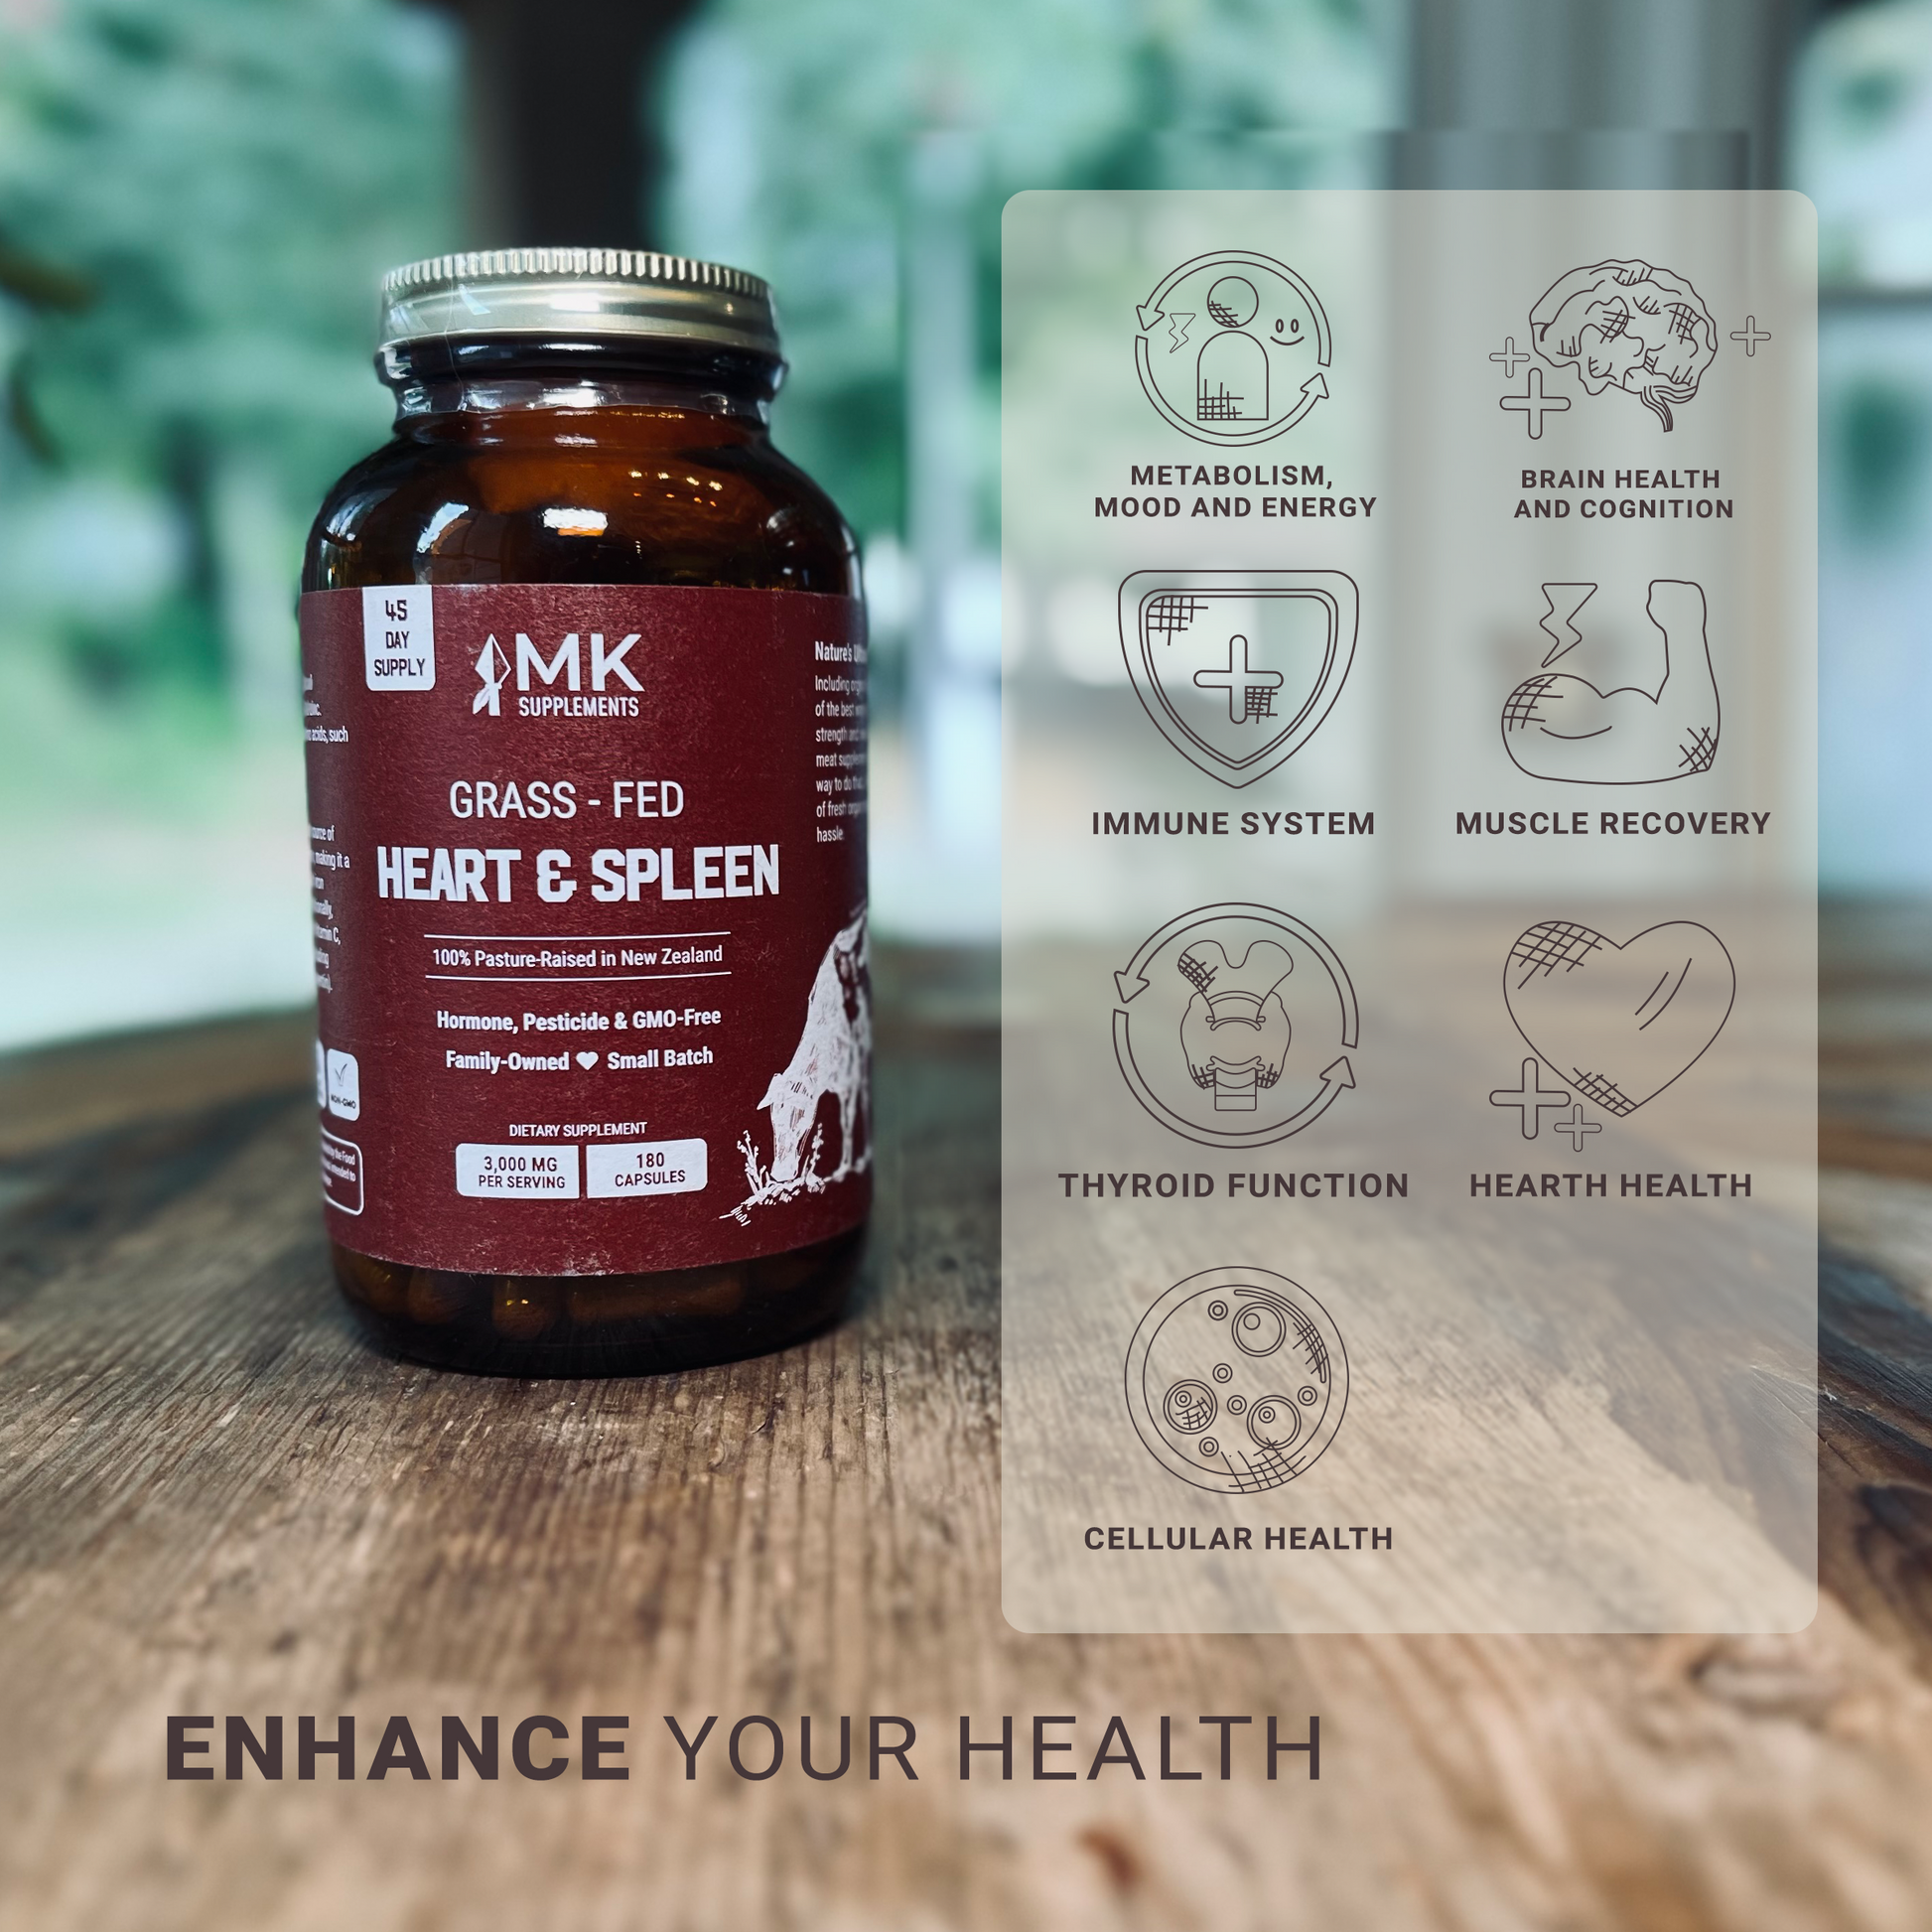 MK Supplements Heart & Spleen Benefits